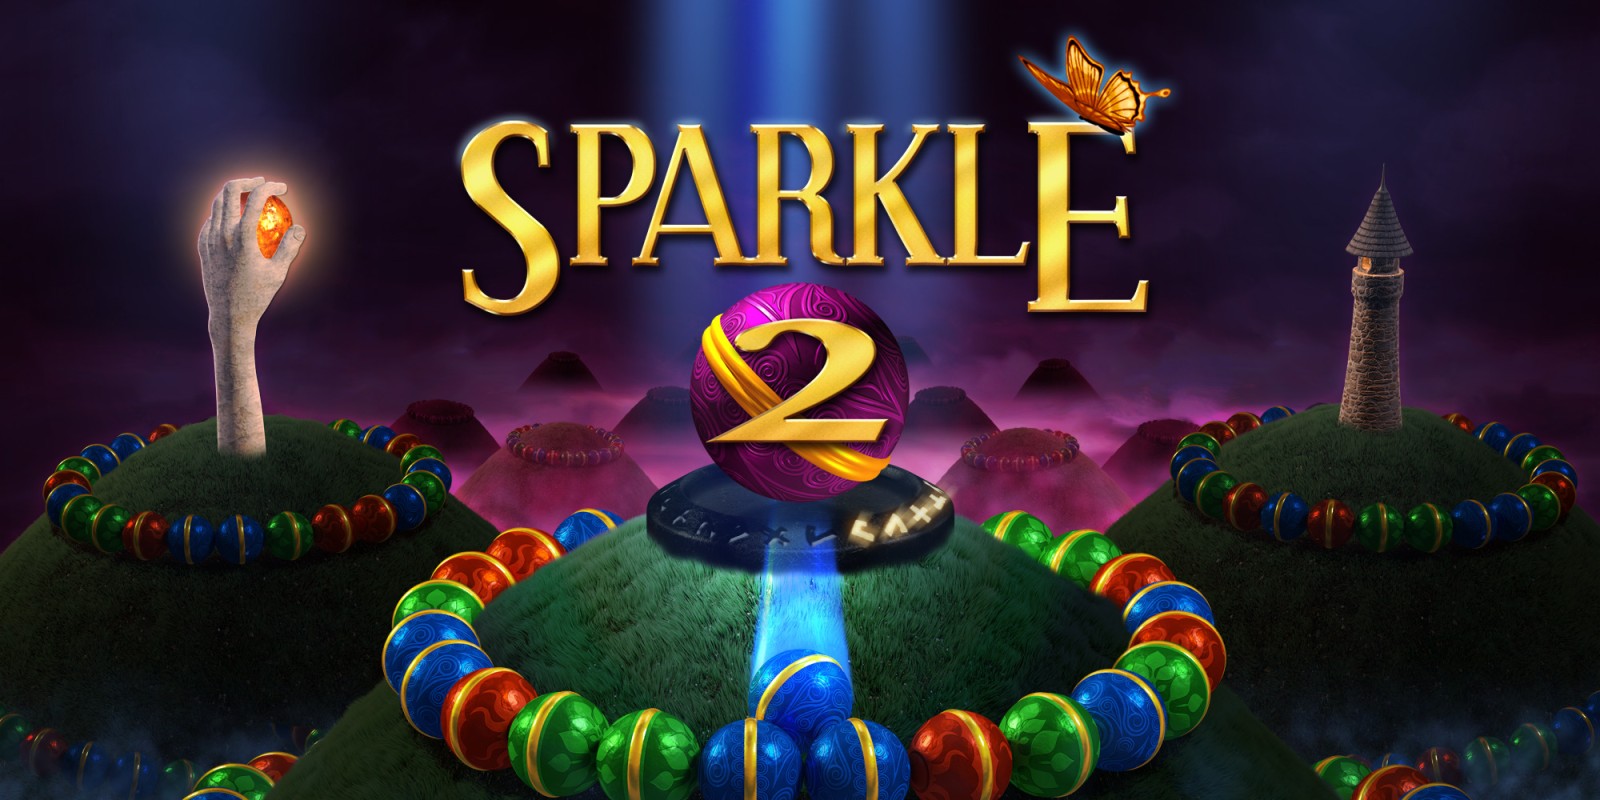 sparkle 2 download